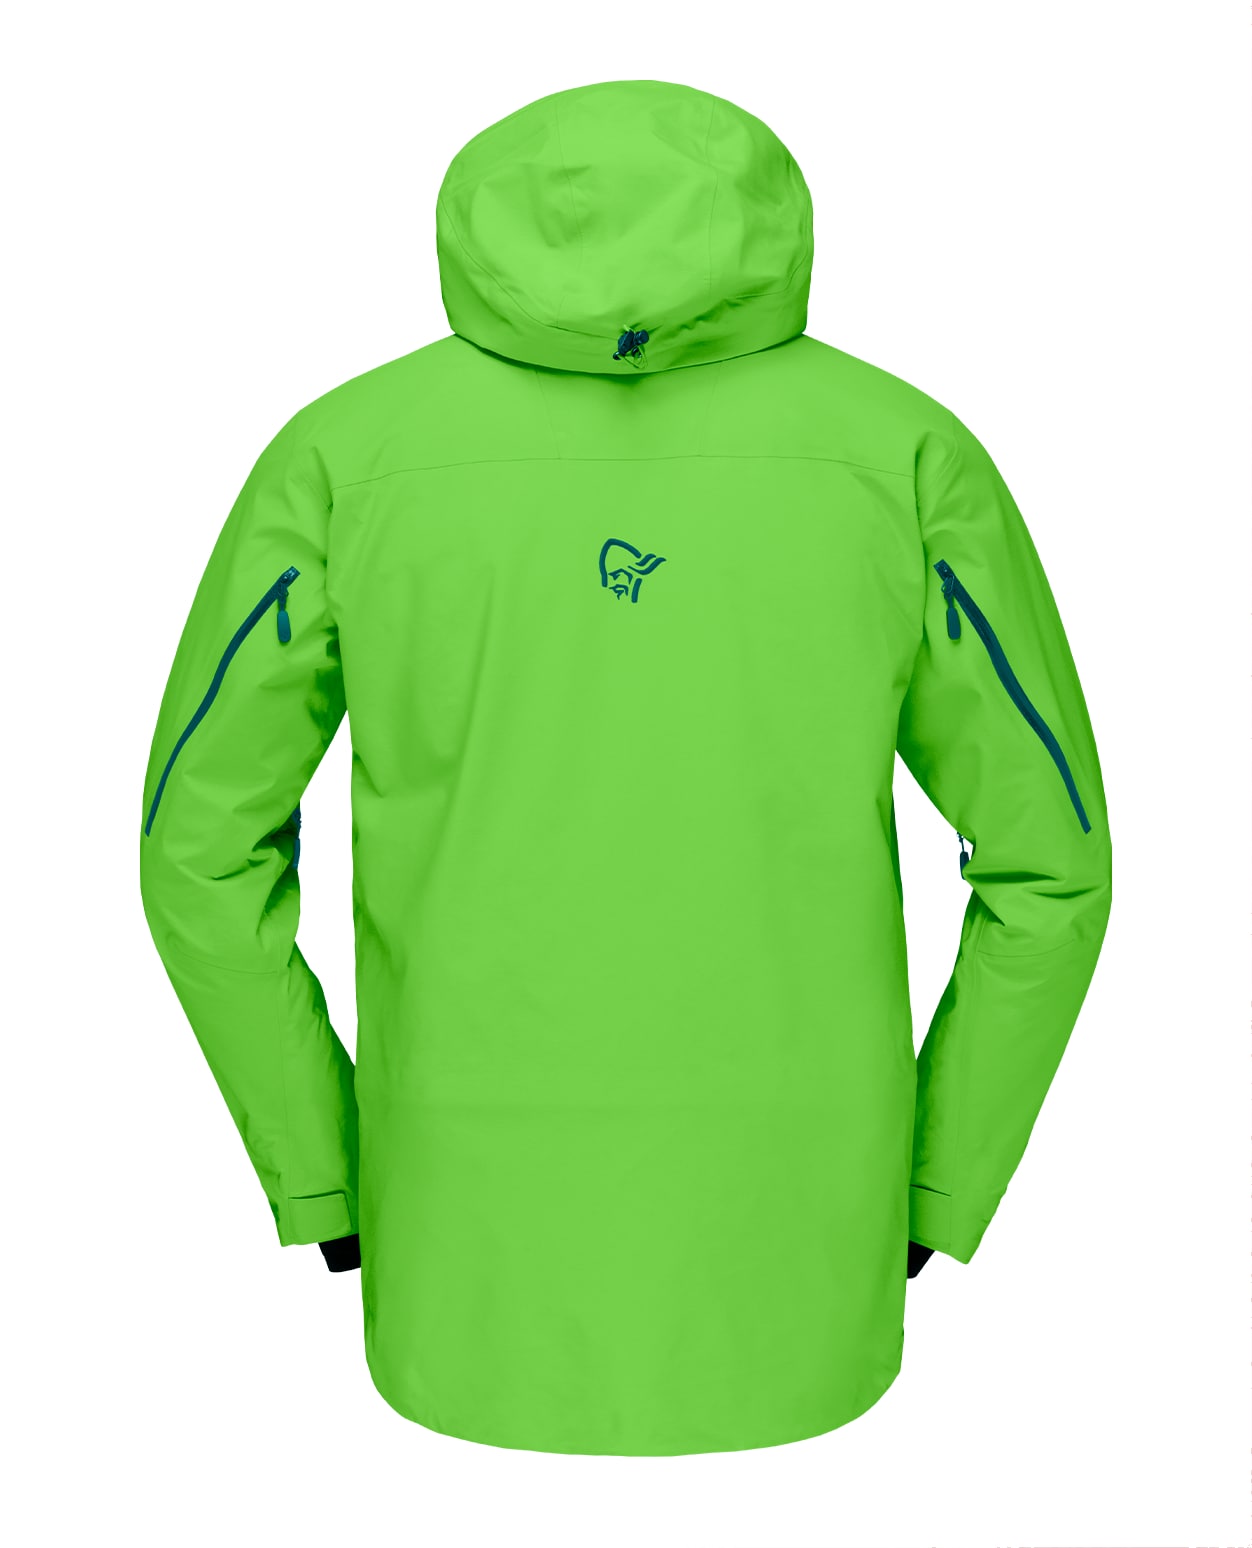 Norröna M Lofoten Gore-Tex Pro Plus Jacket Classic Green